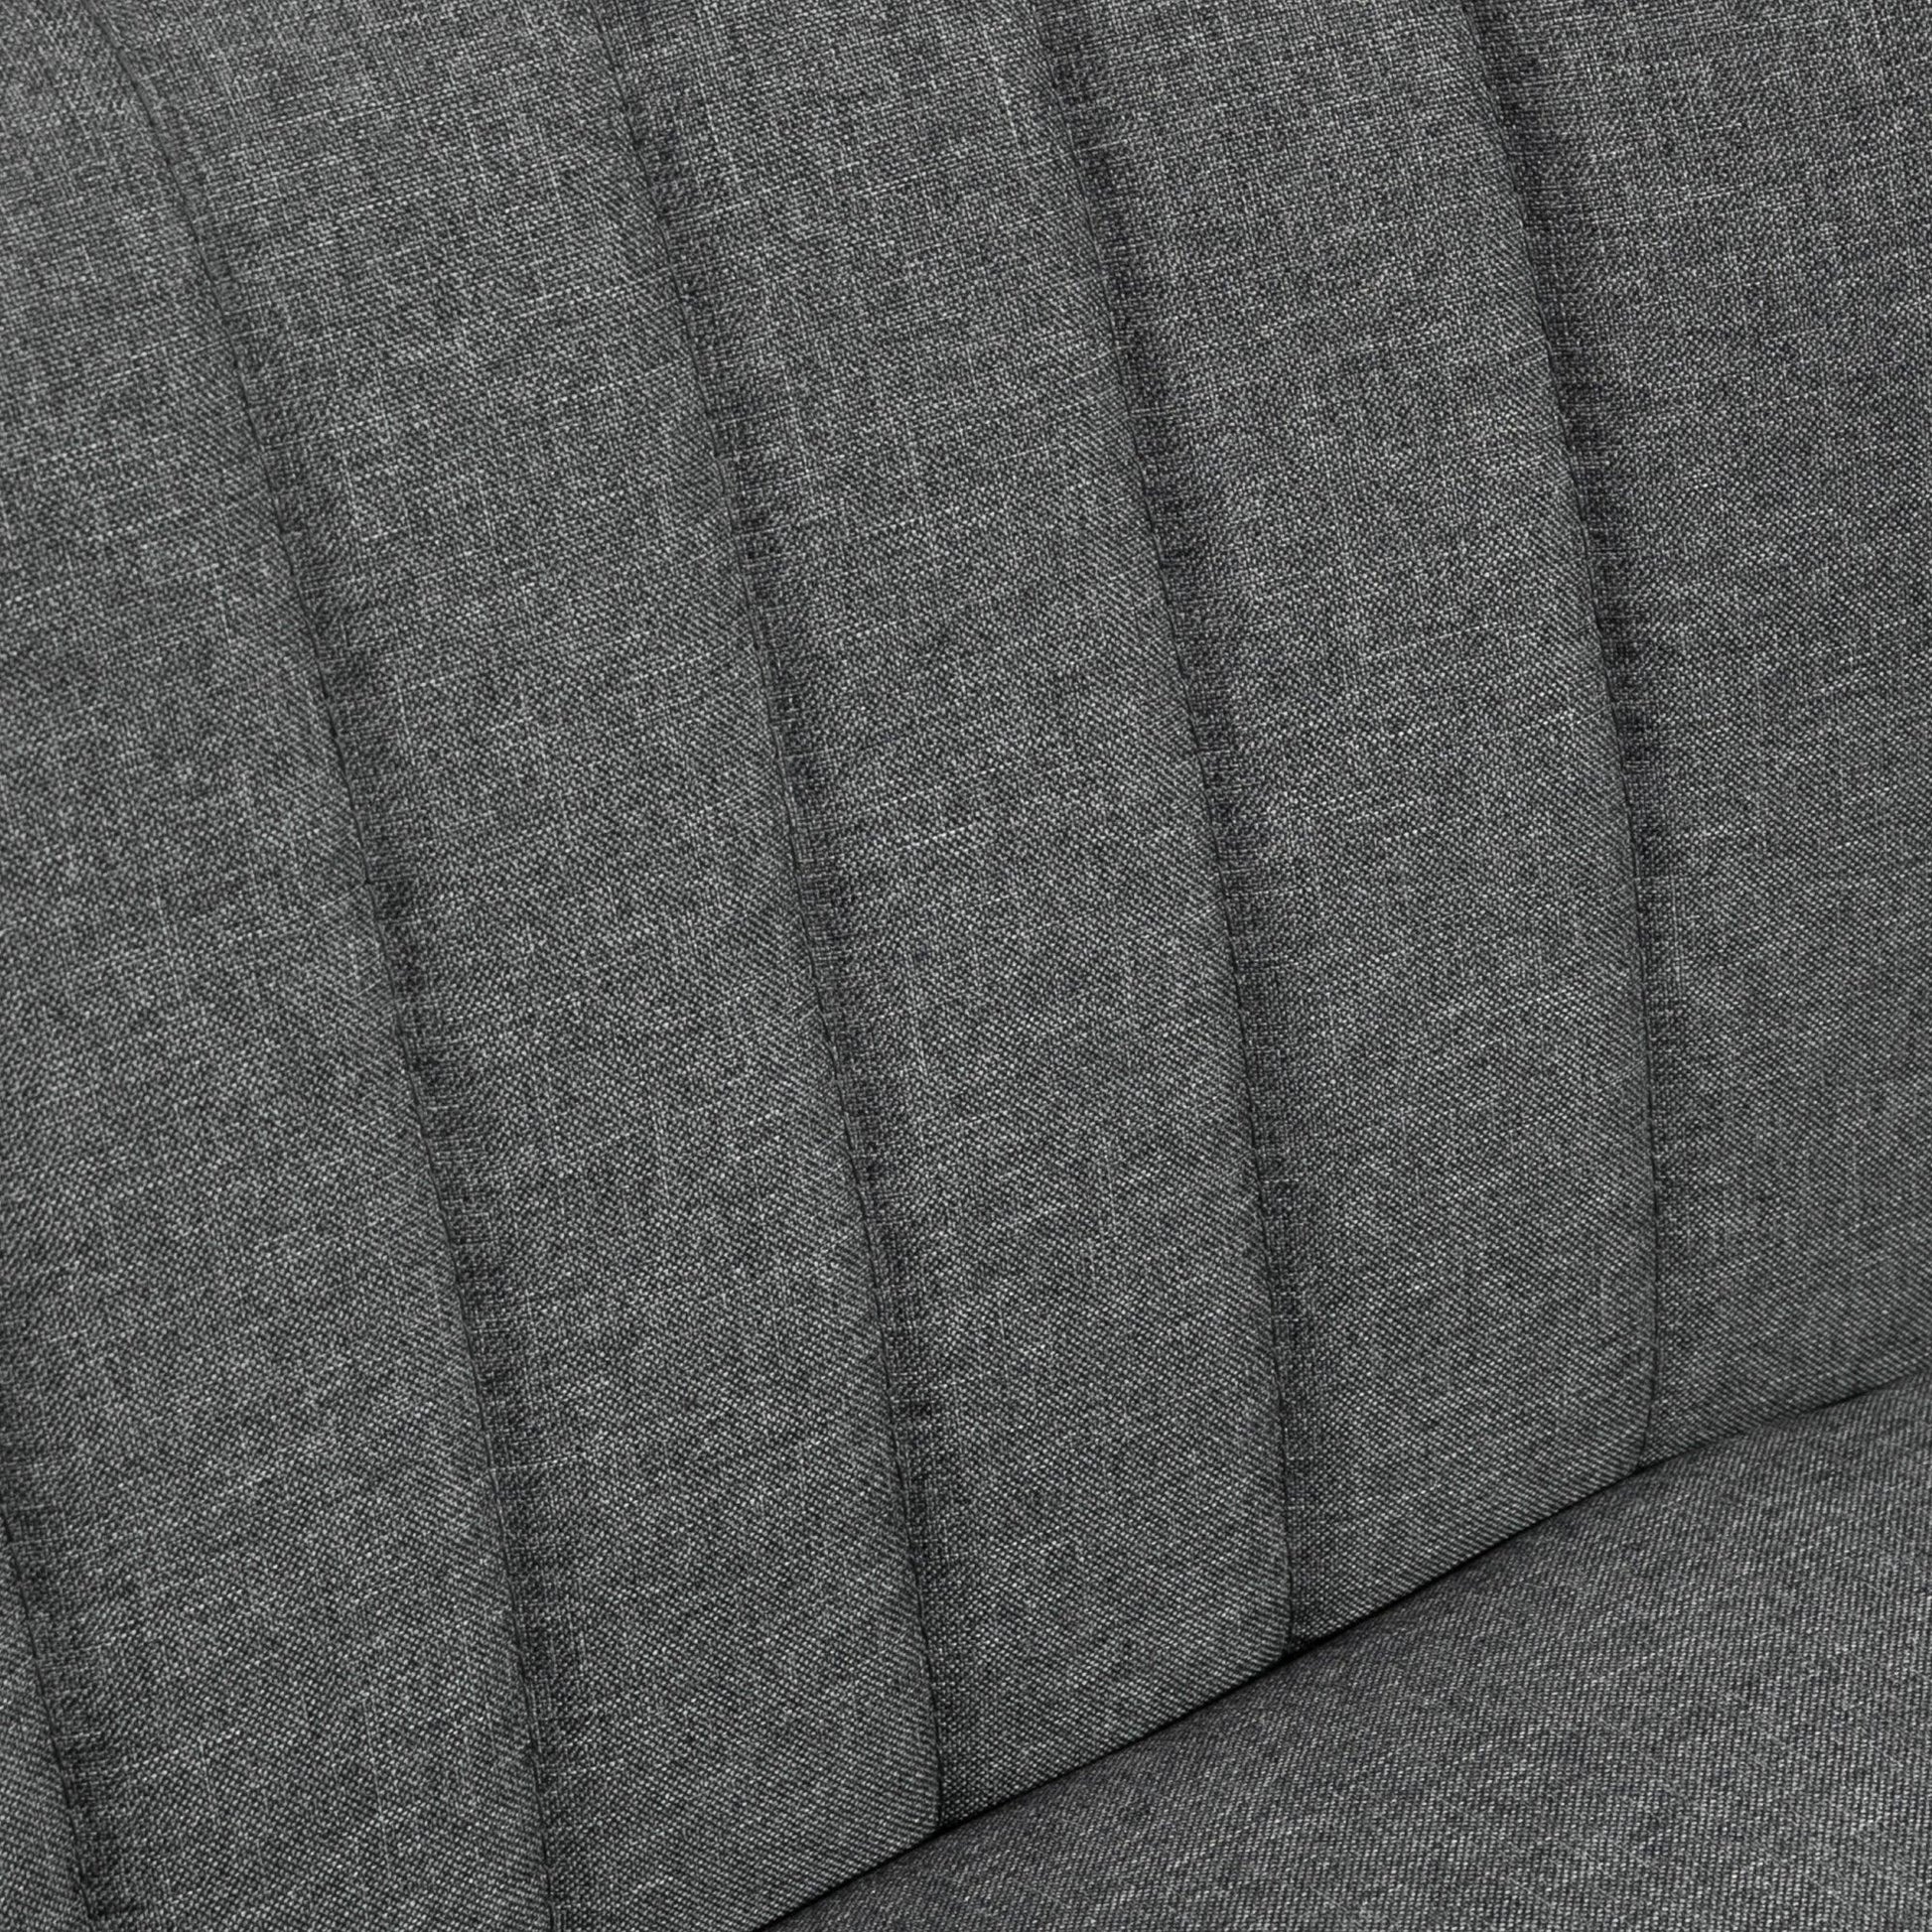 HOMCOM Dark Grey 2-Seater Sofa - ALL4U RETAILER LTD